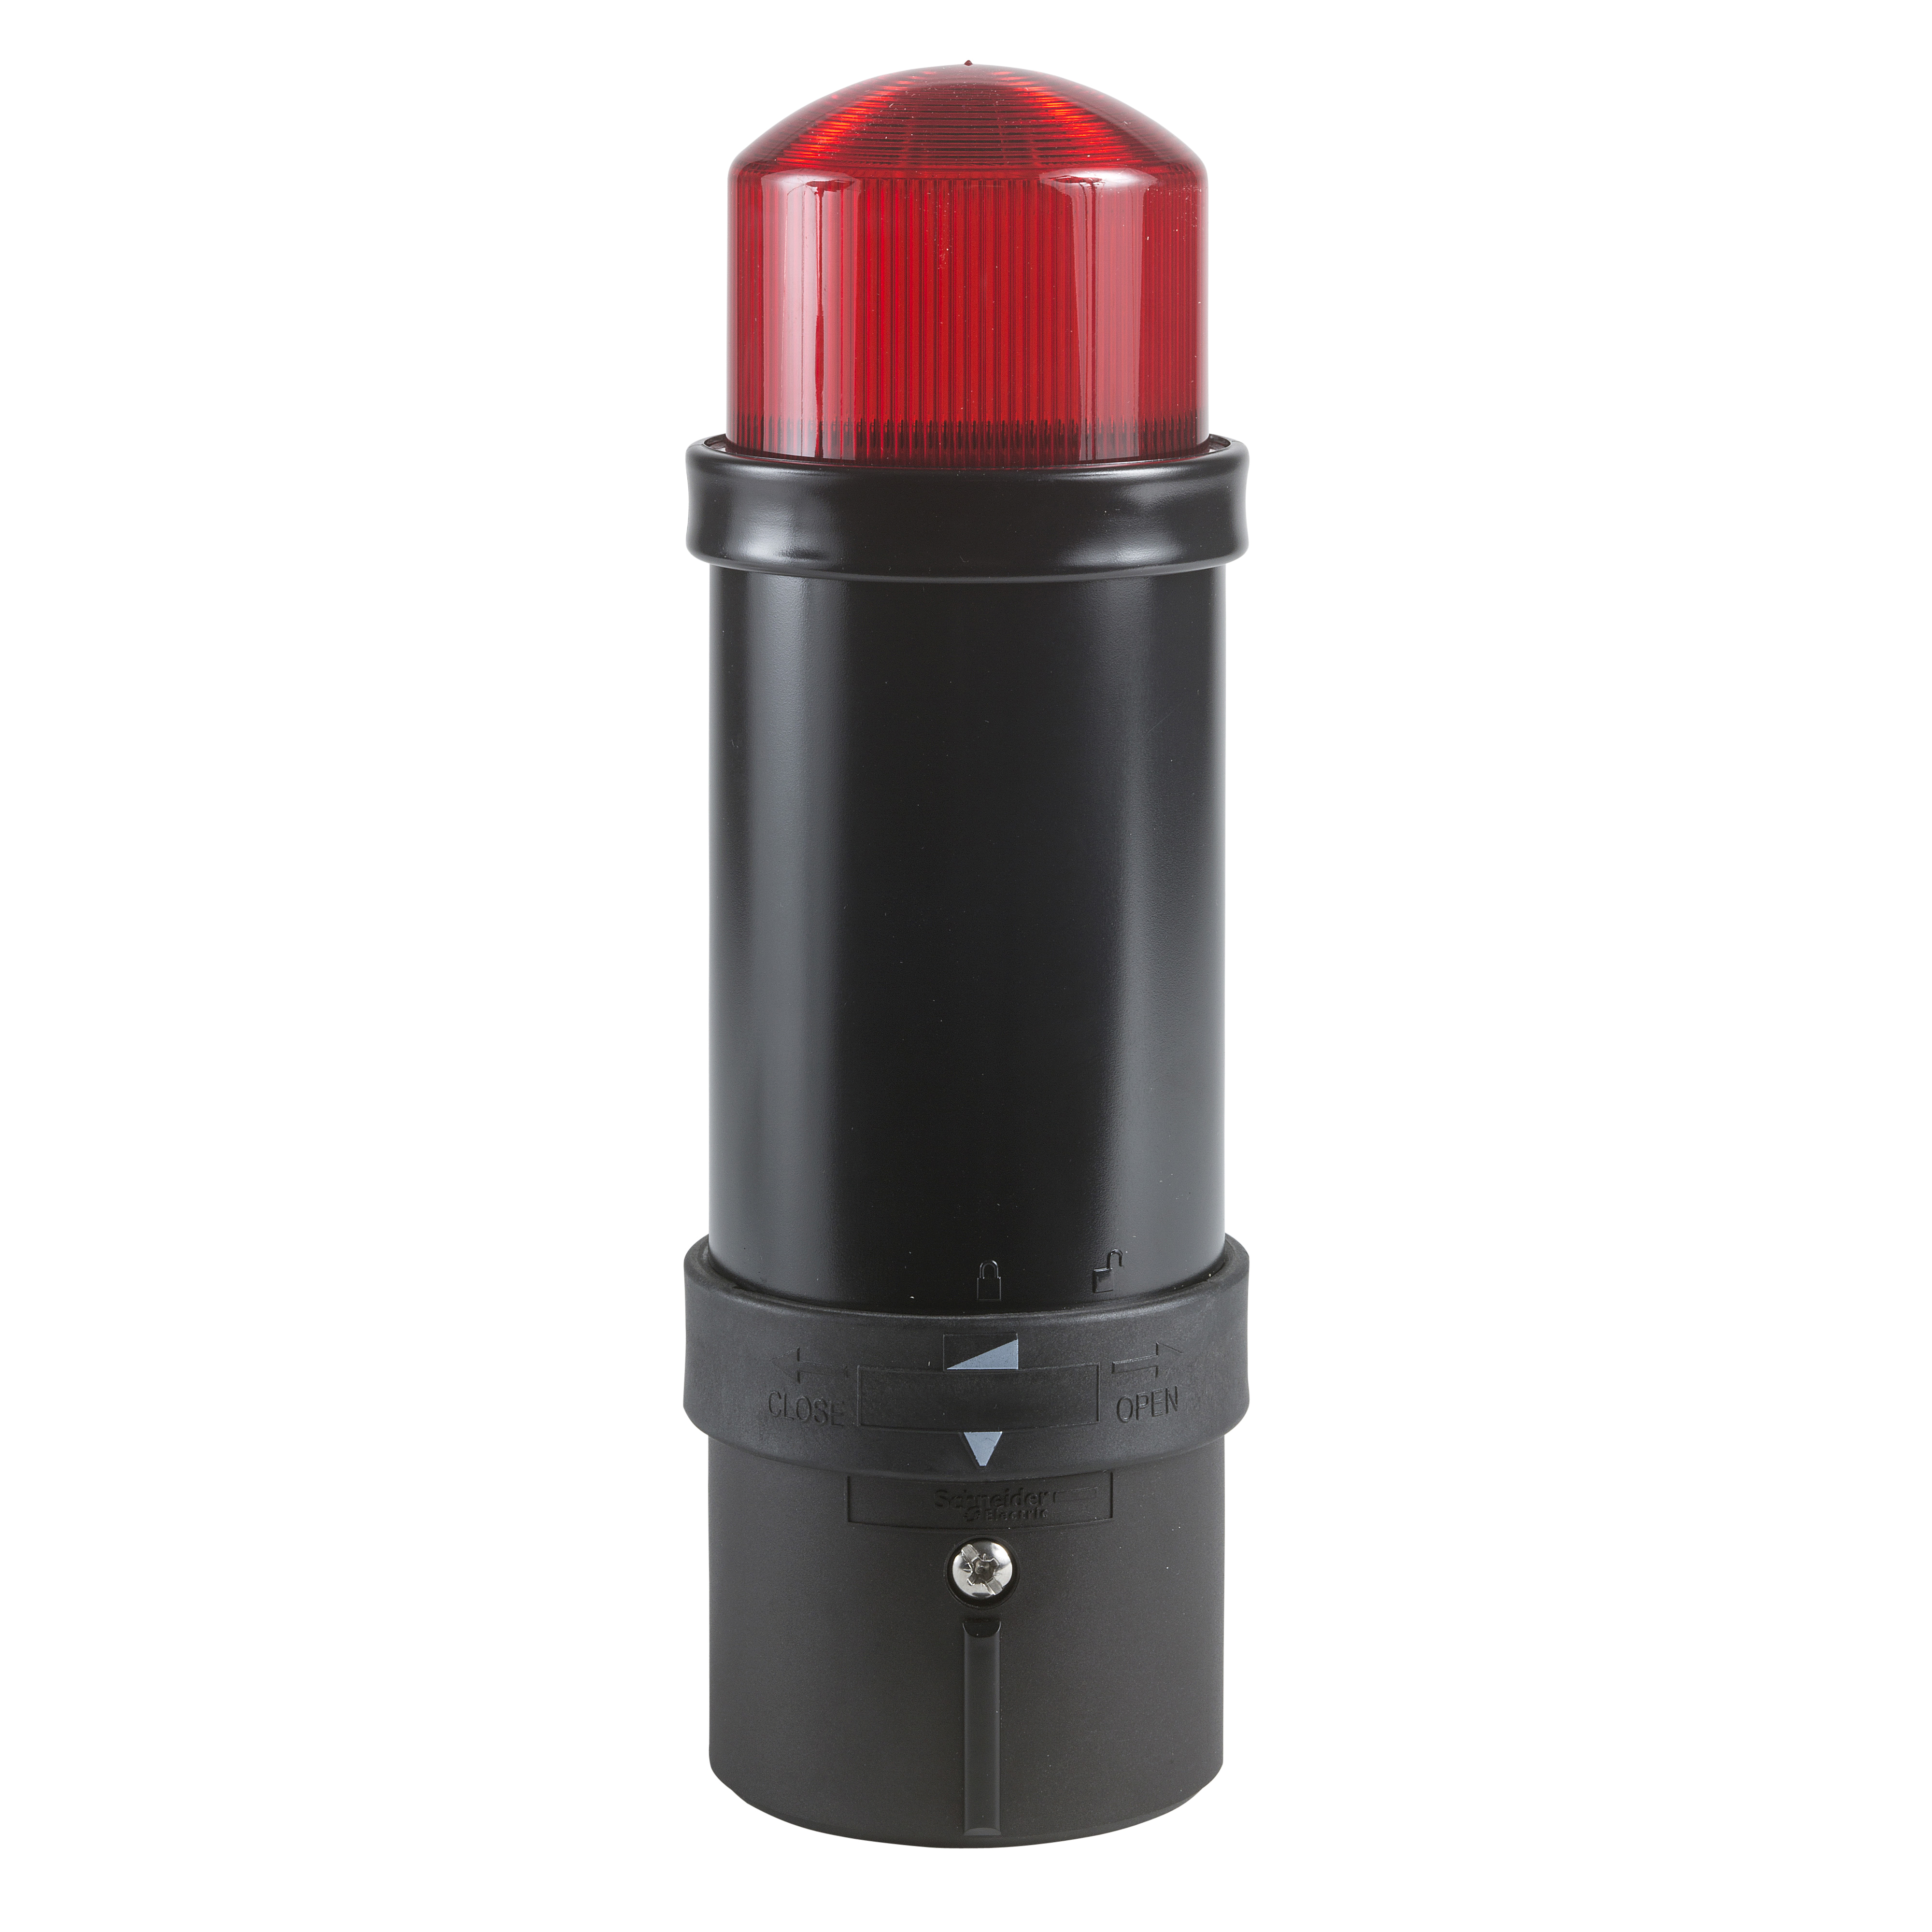 Illuminated beacon, Harmony XVB, plastic, red, 70mm, flashing, integral flash discharge tube, 5 joule, 24V AC DC